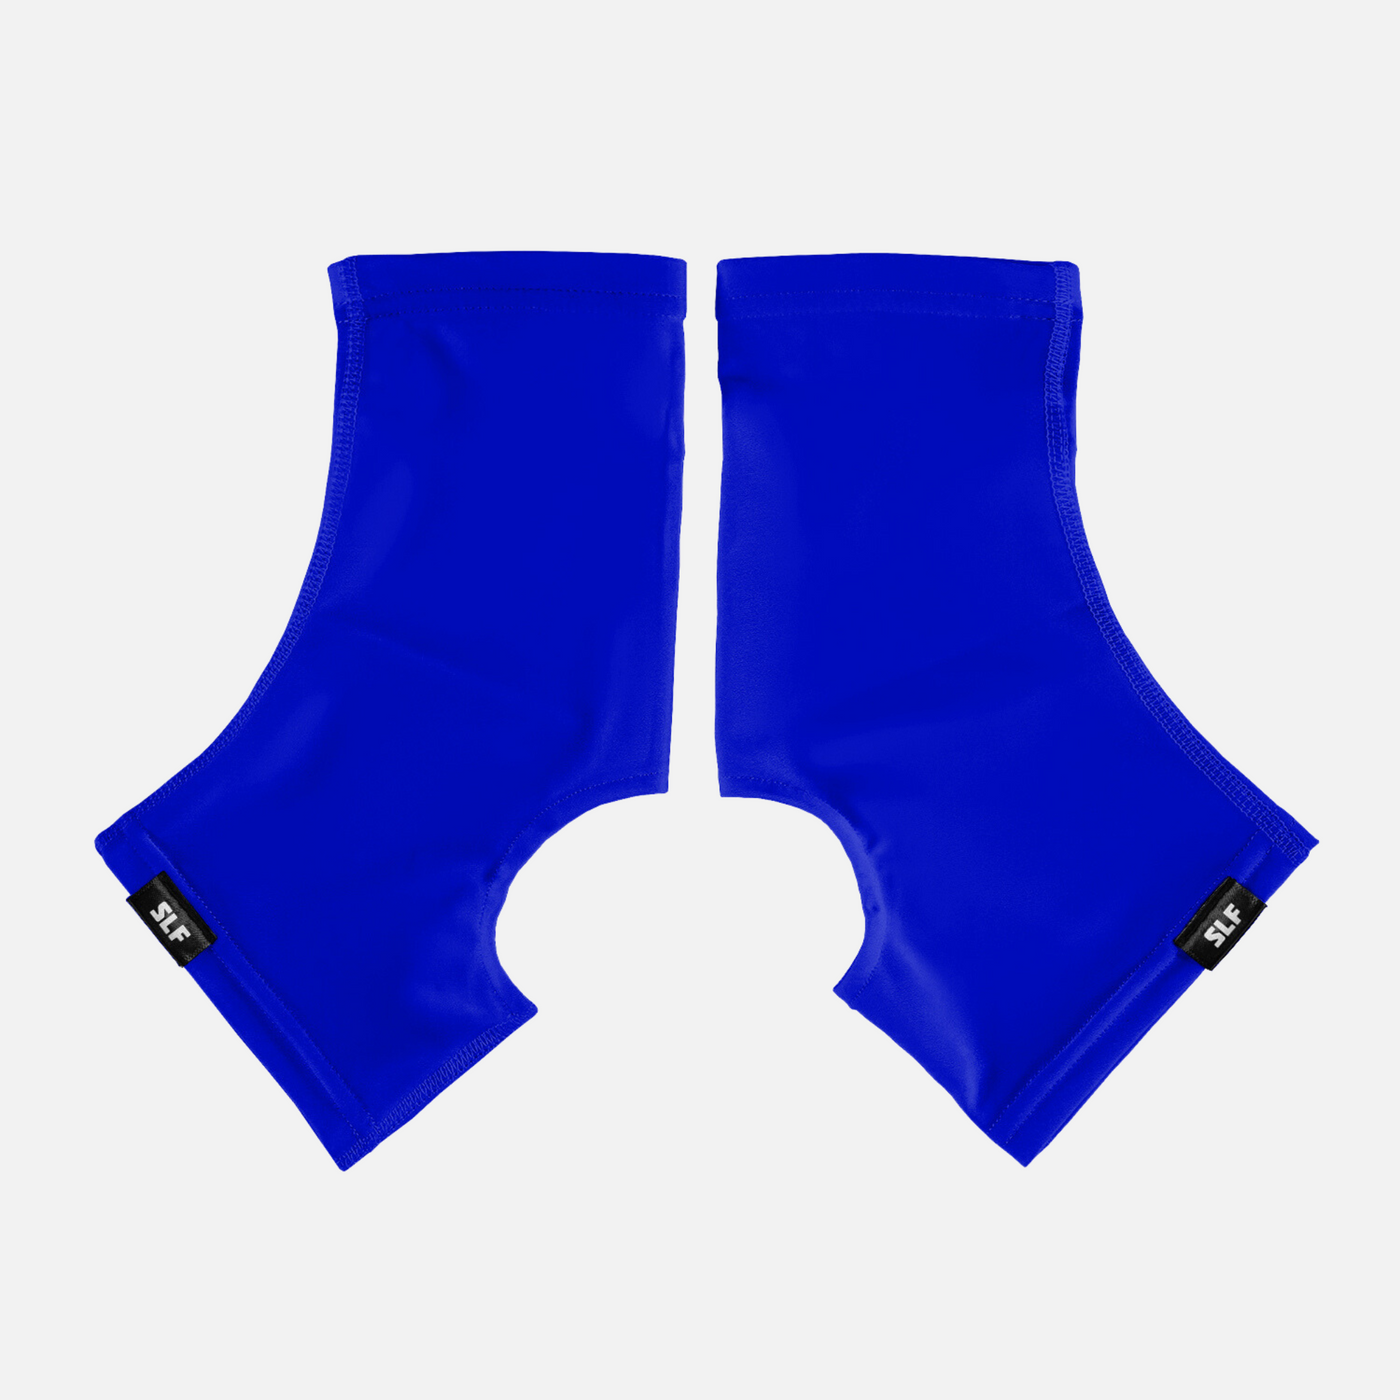 Hue Royal Blue Spats / Cleat Covers - Big